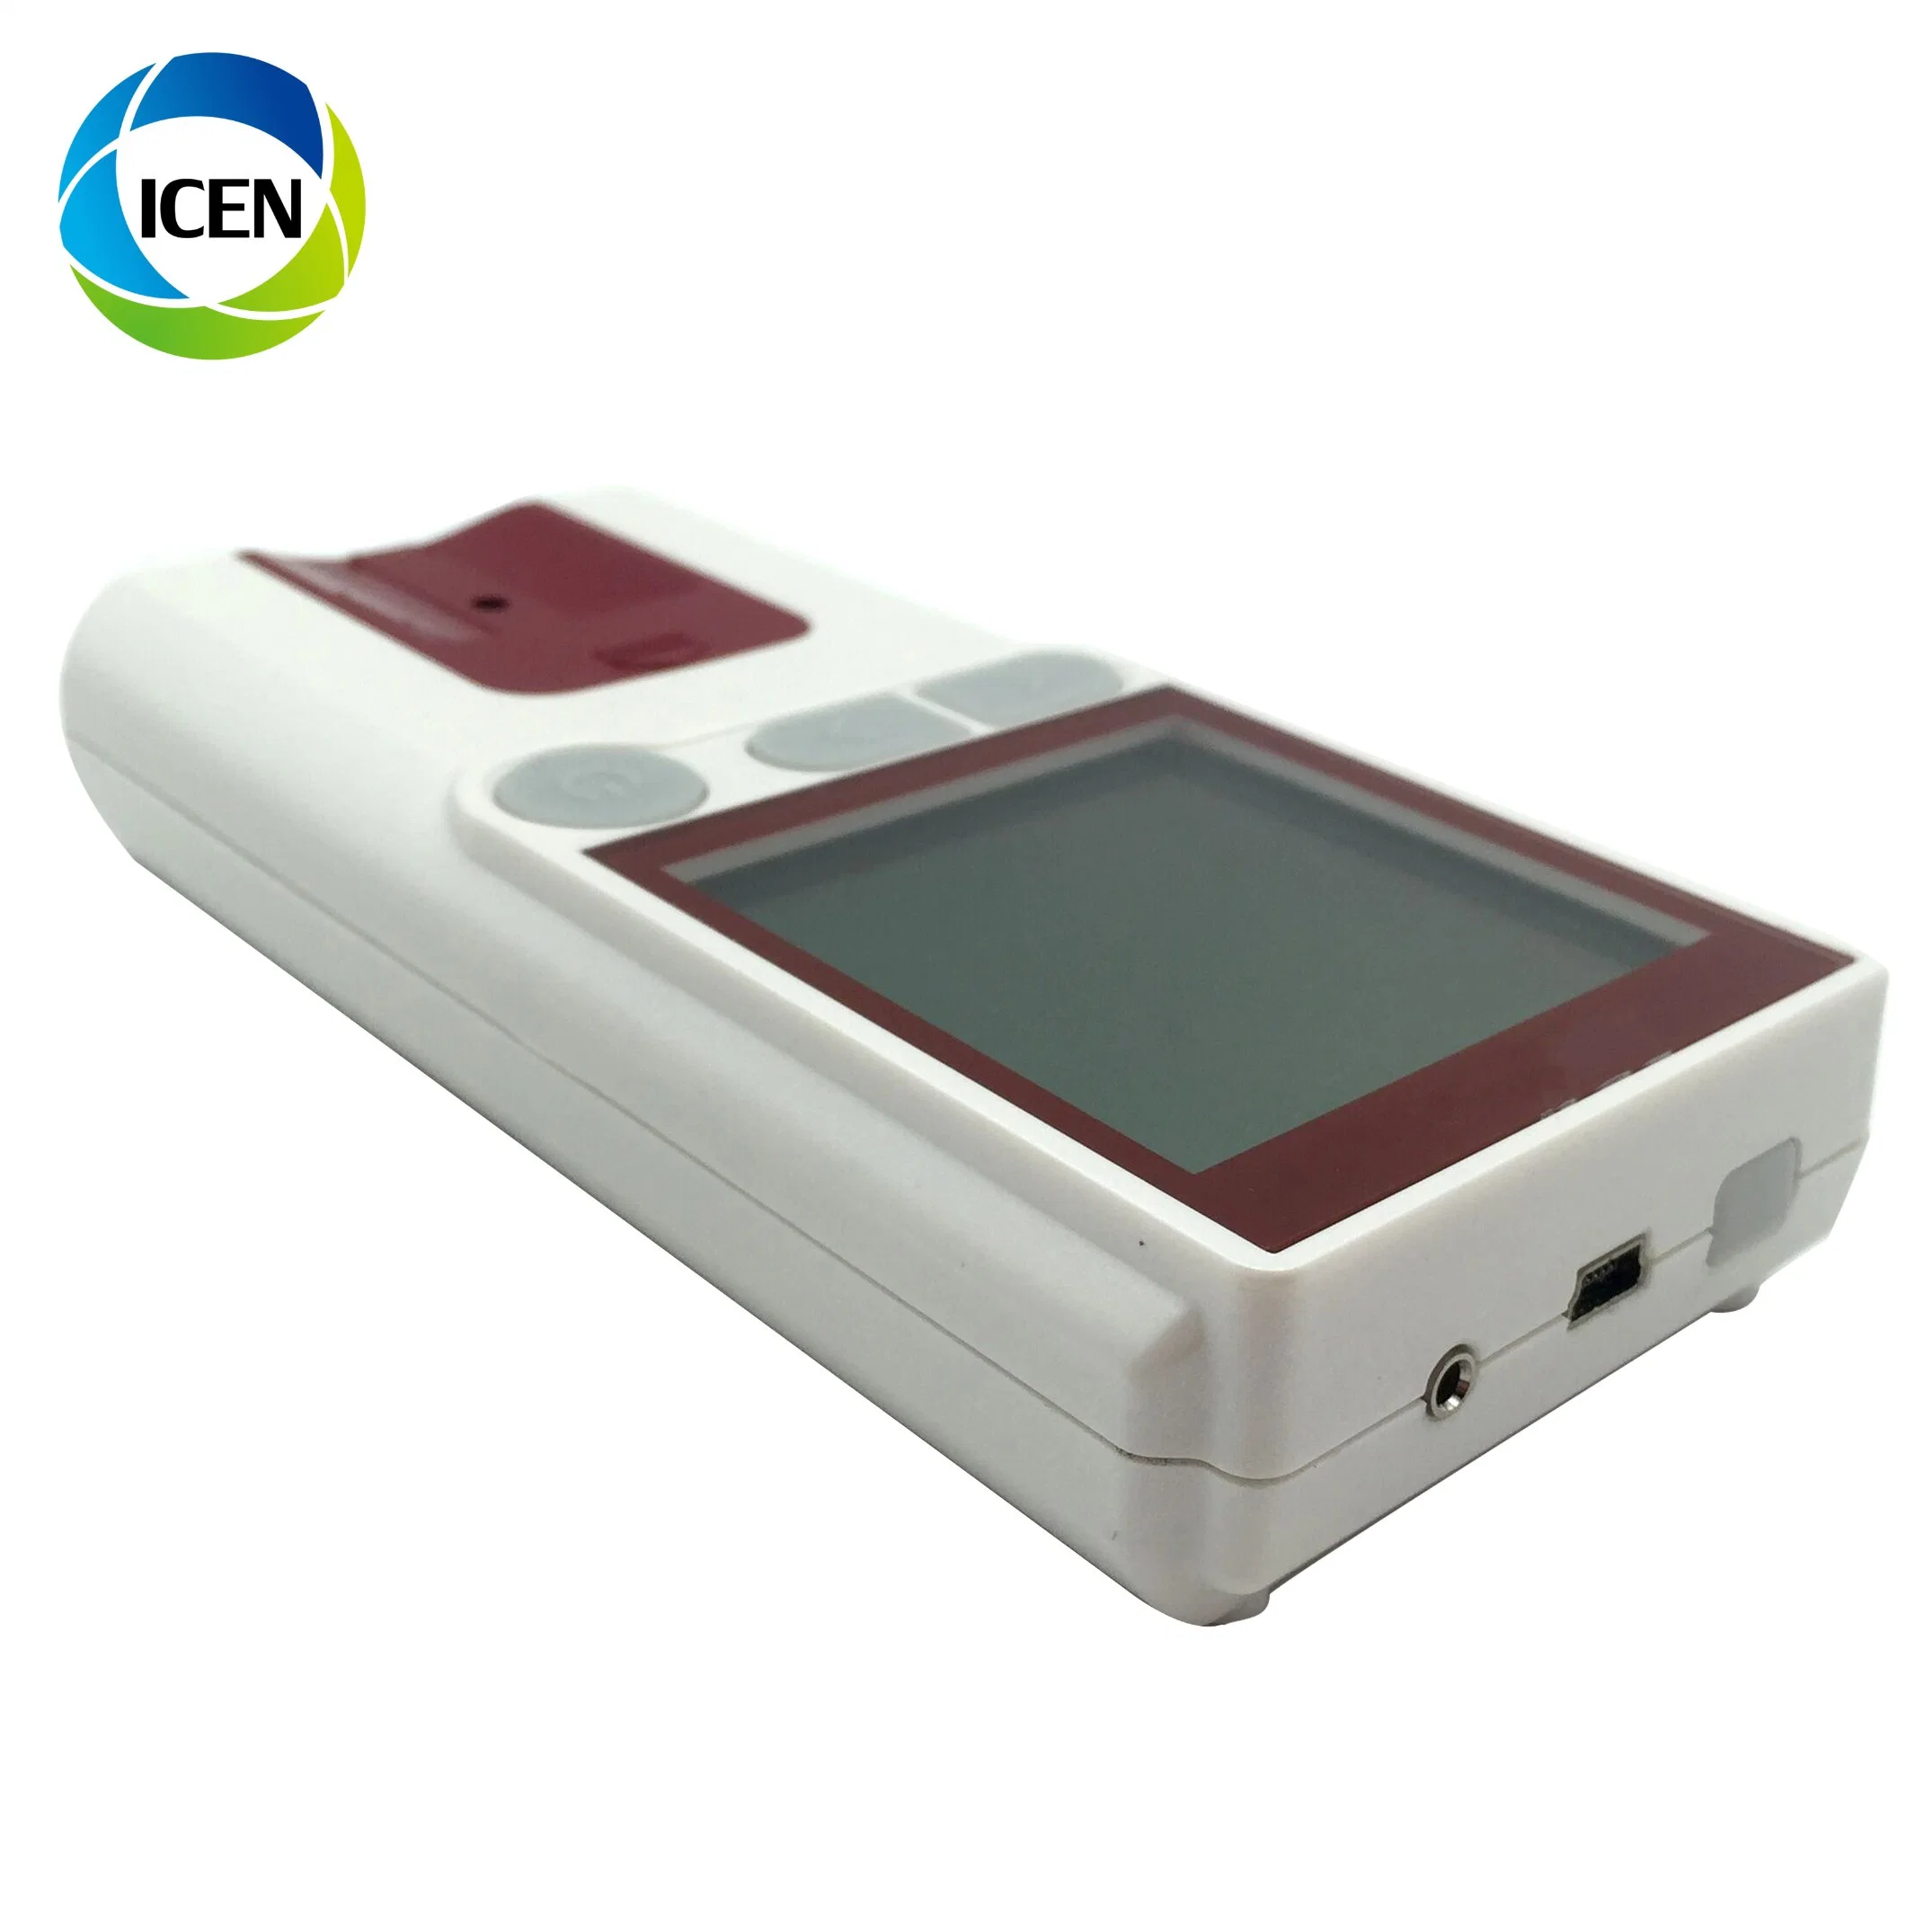 in-B152-2 Portable Home and Medical Blood Testing Analyzer Machine Hemoglobin Meter